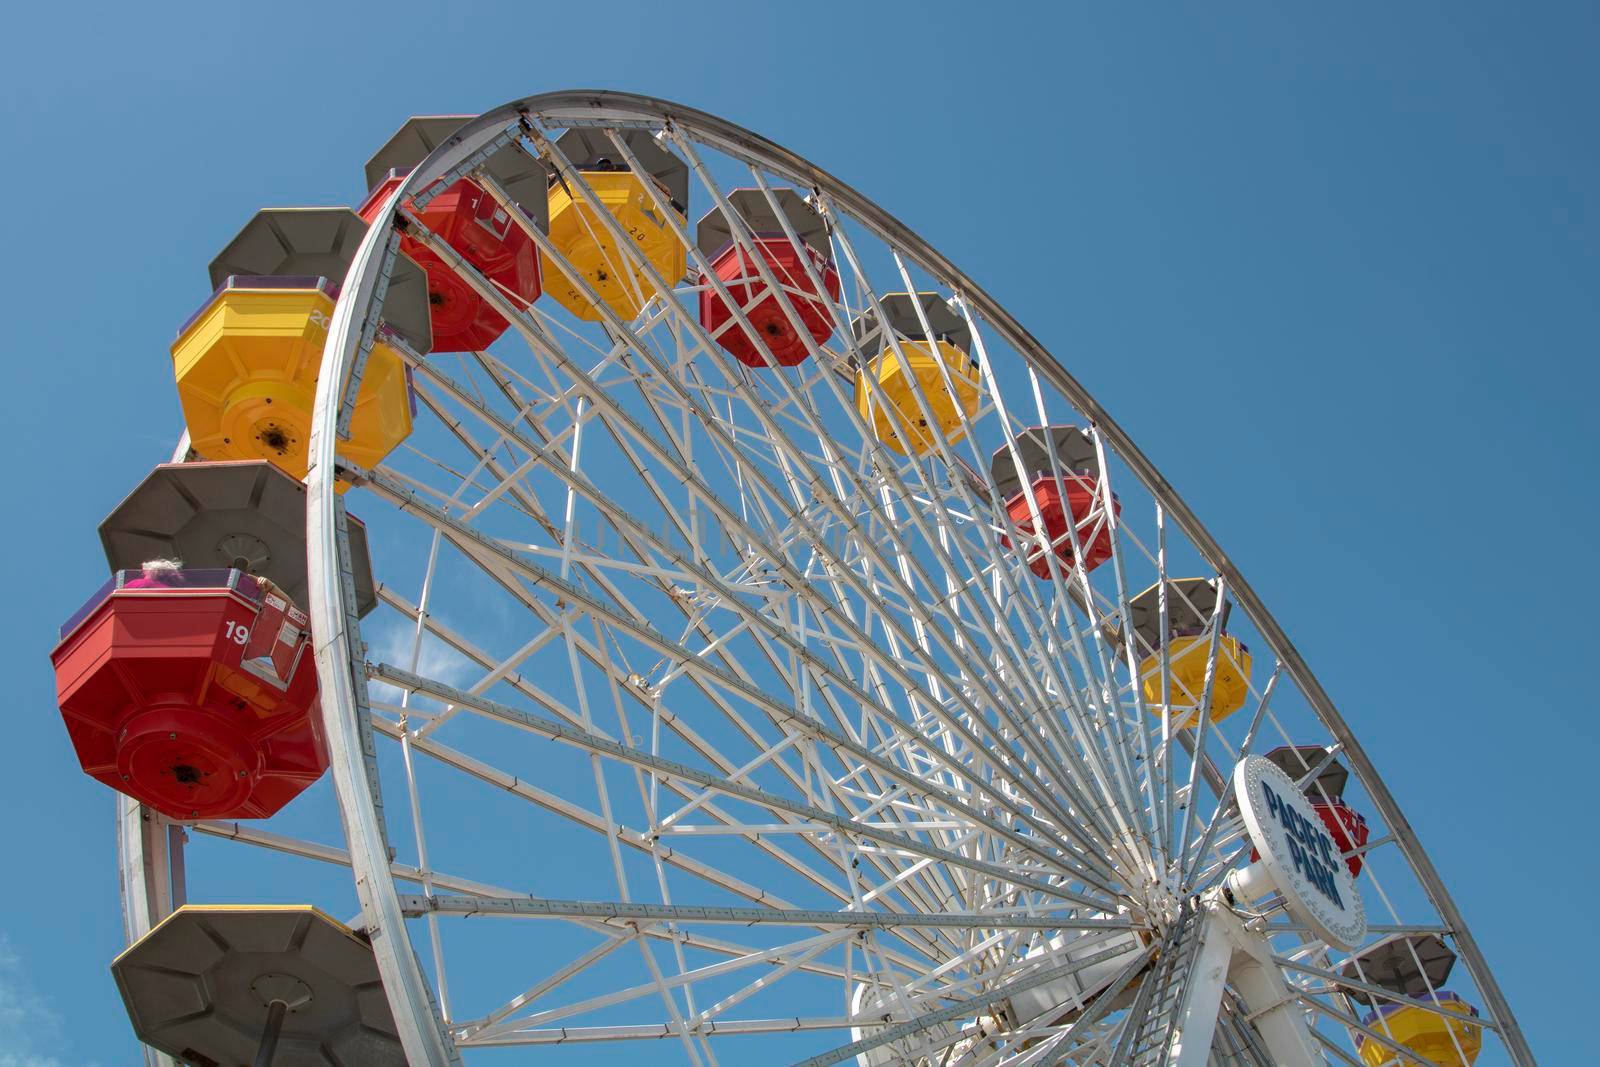 Colourful ferris wheel in Santa Monica in Los Angeles